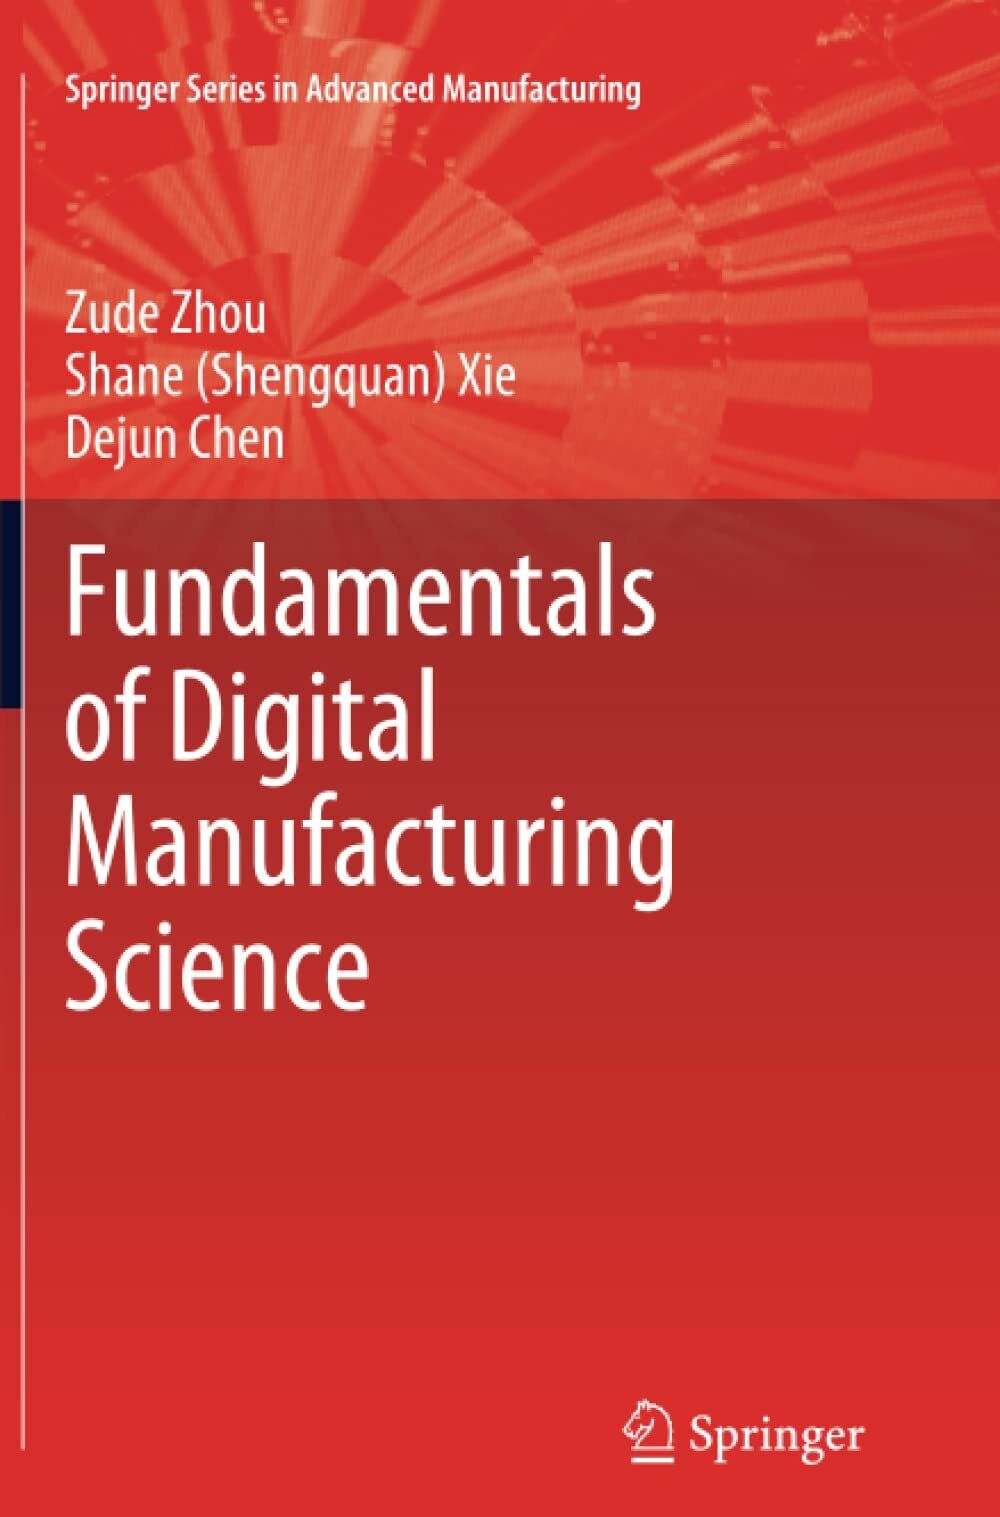 Fundamentals of Digital Manufacturing Science - Springer, 2013